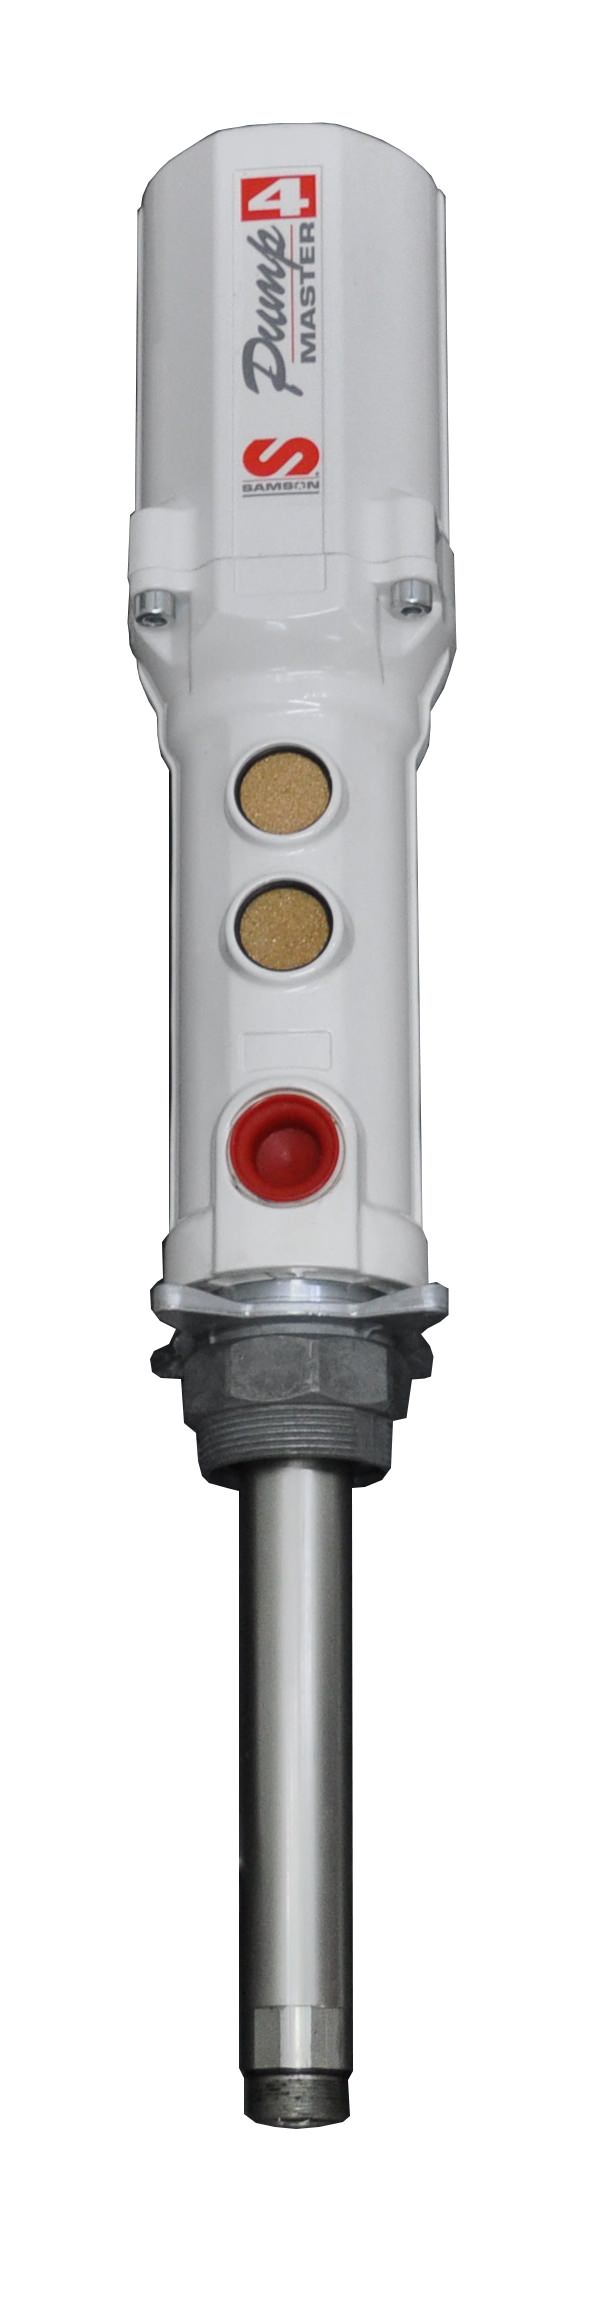 PumpMaster 4 3:1 (55 Gal.) Air Operated Oil Pump